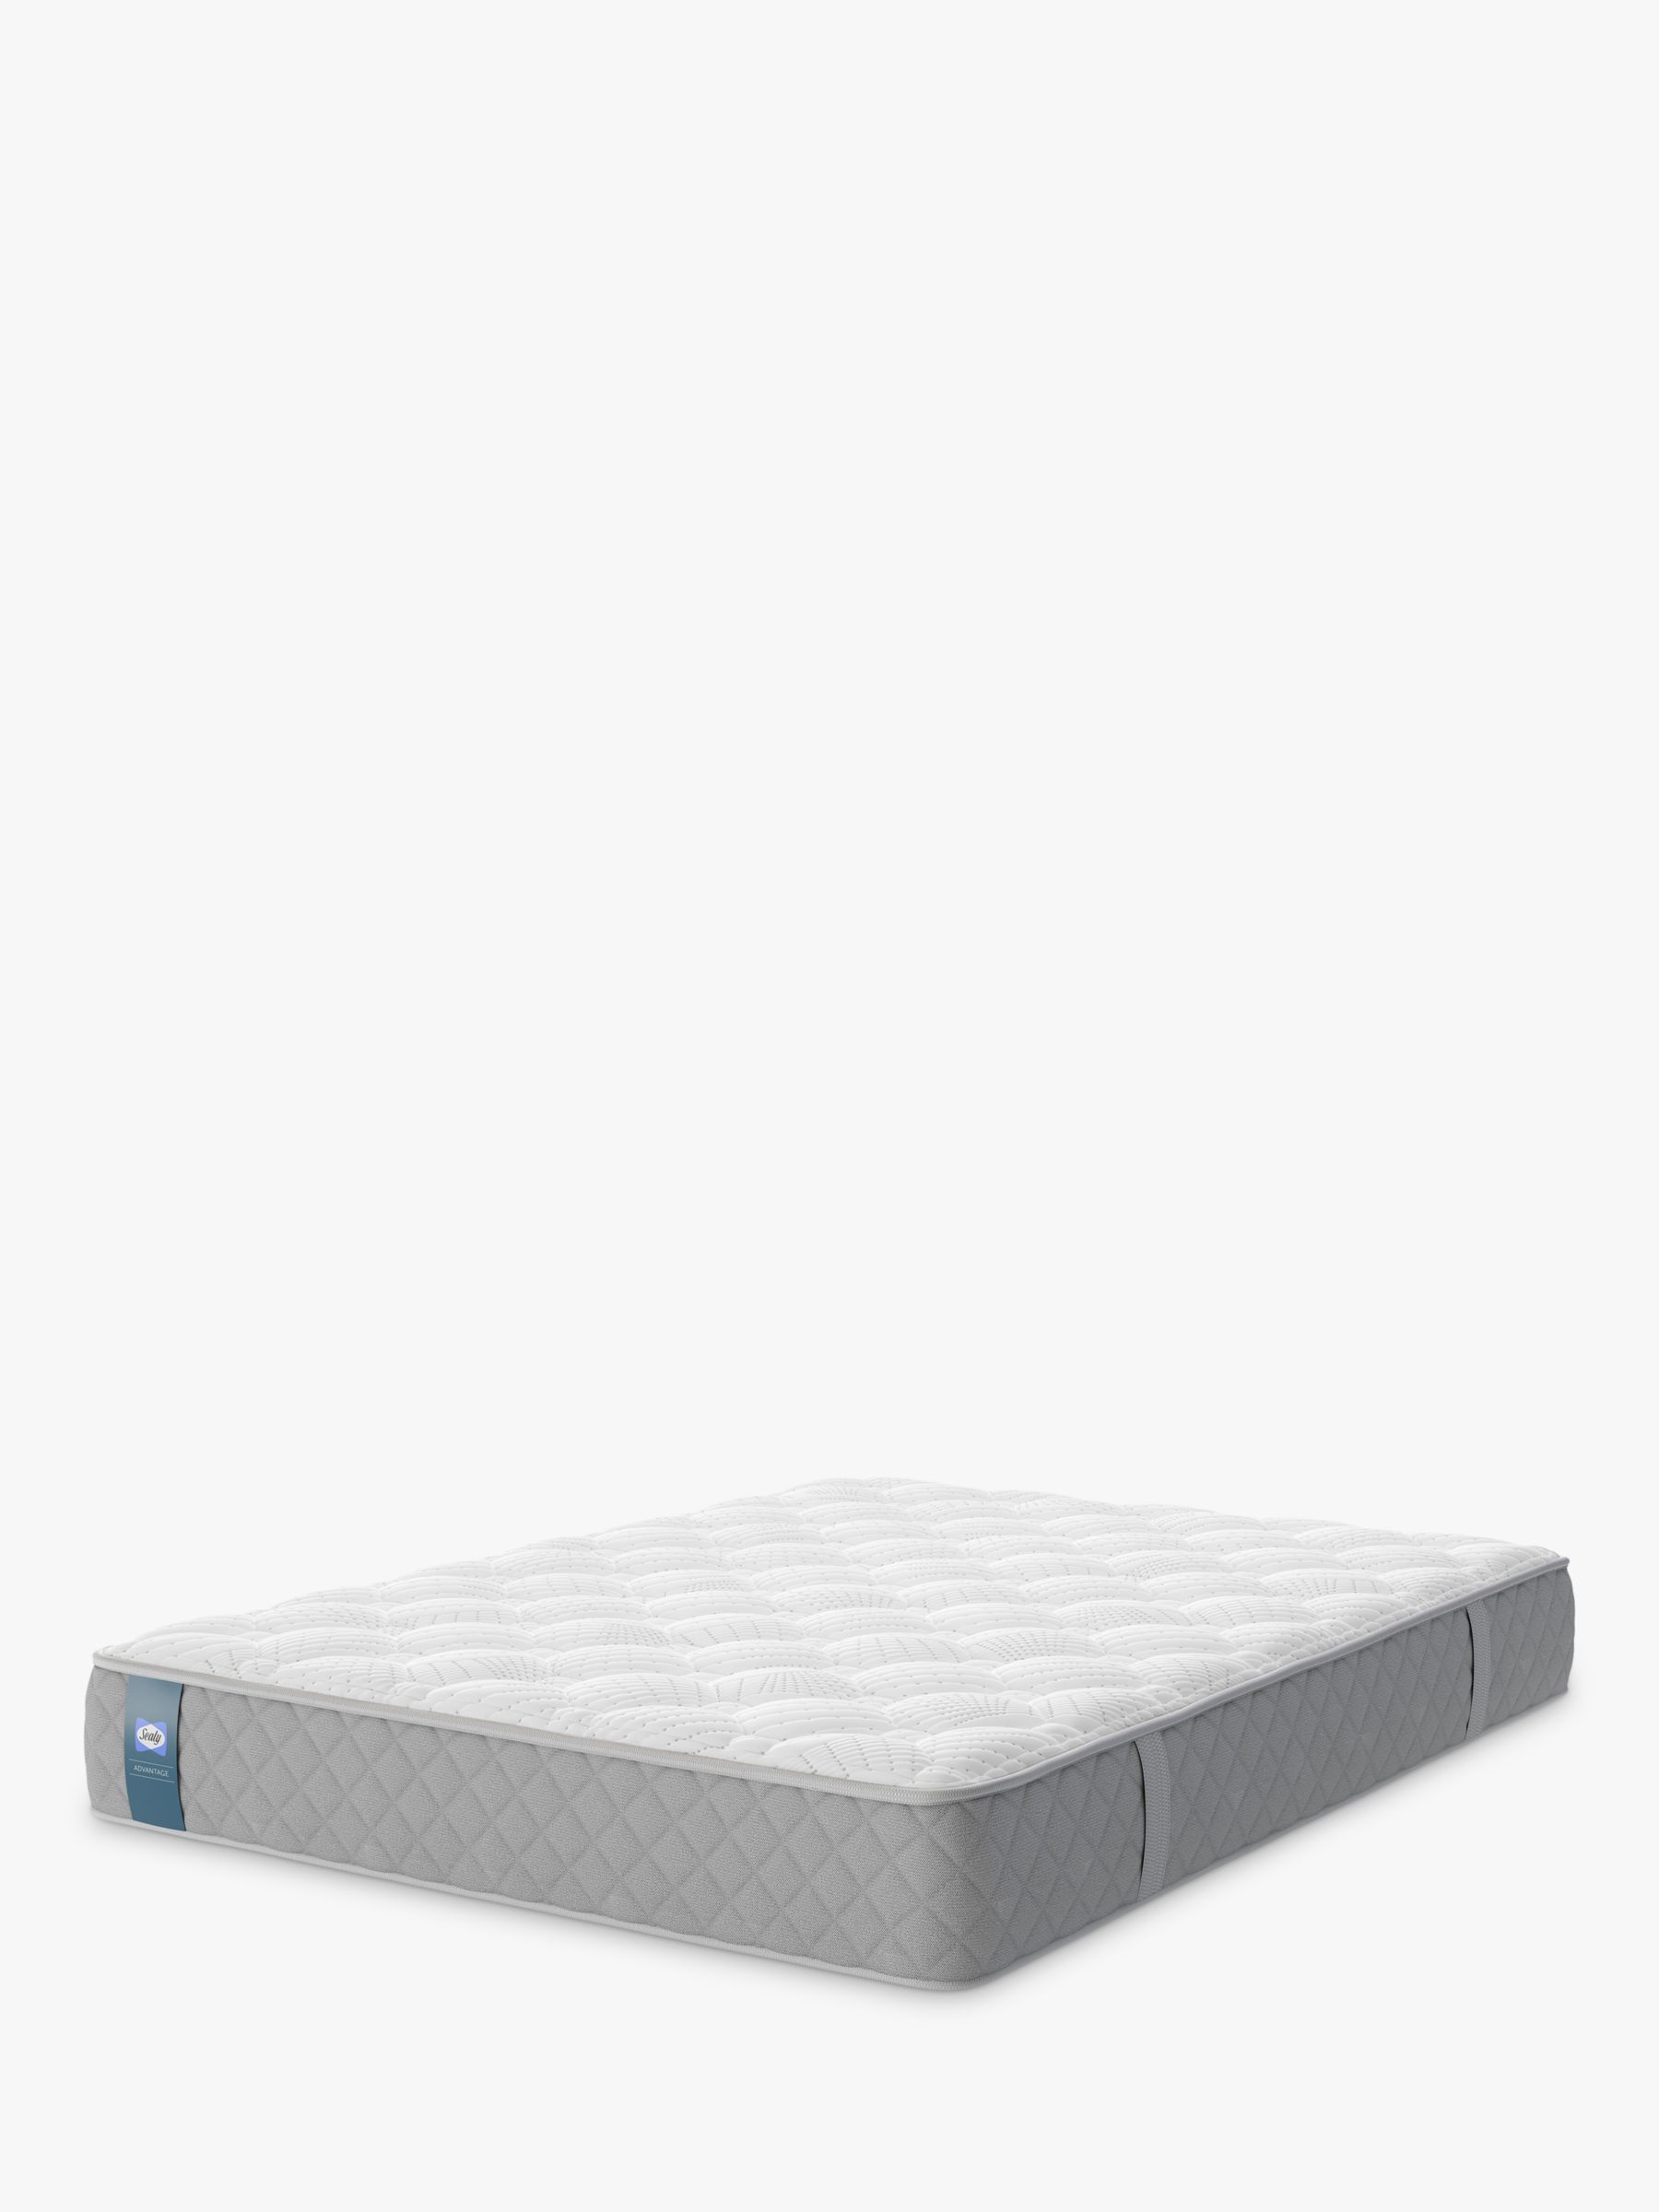 Photo of Sealy advantage upton mattress regular/firmer tension double